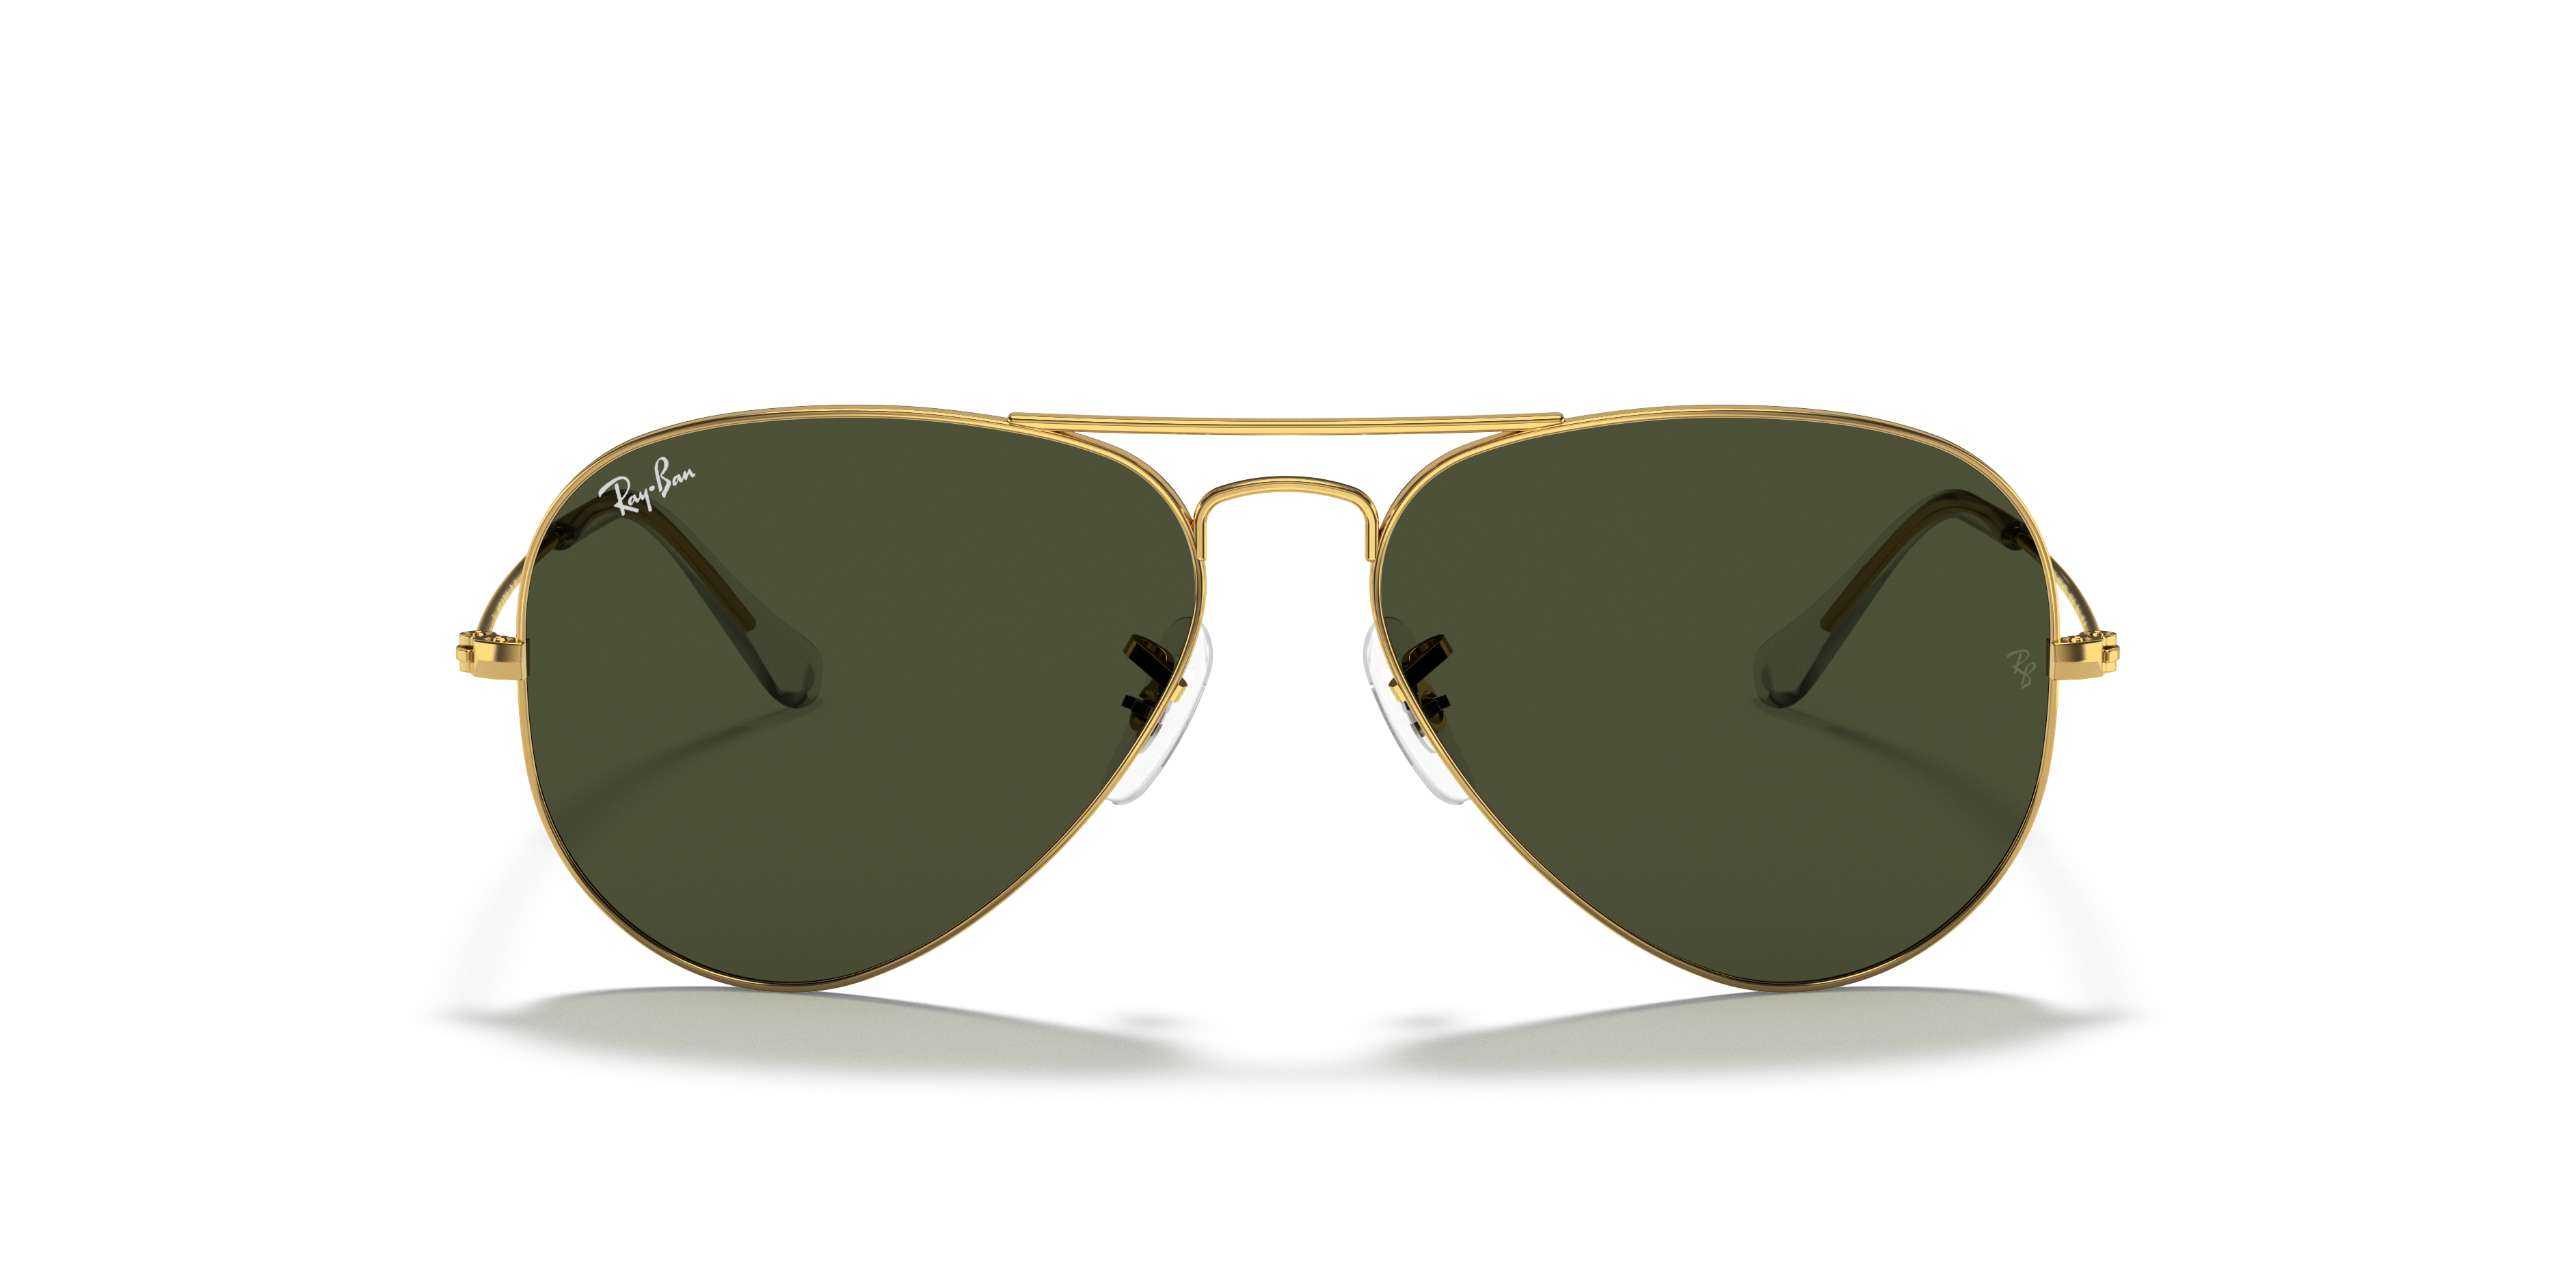 Ray-Ban Men's Non-Polarized Sunglasses